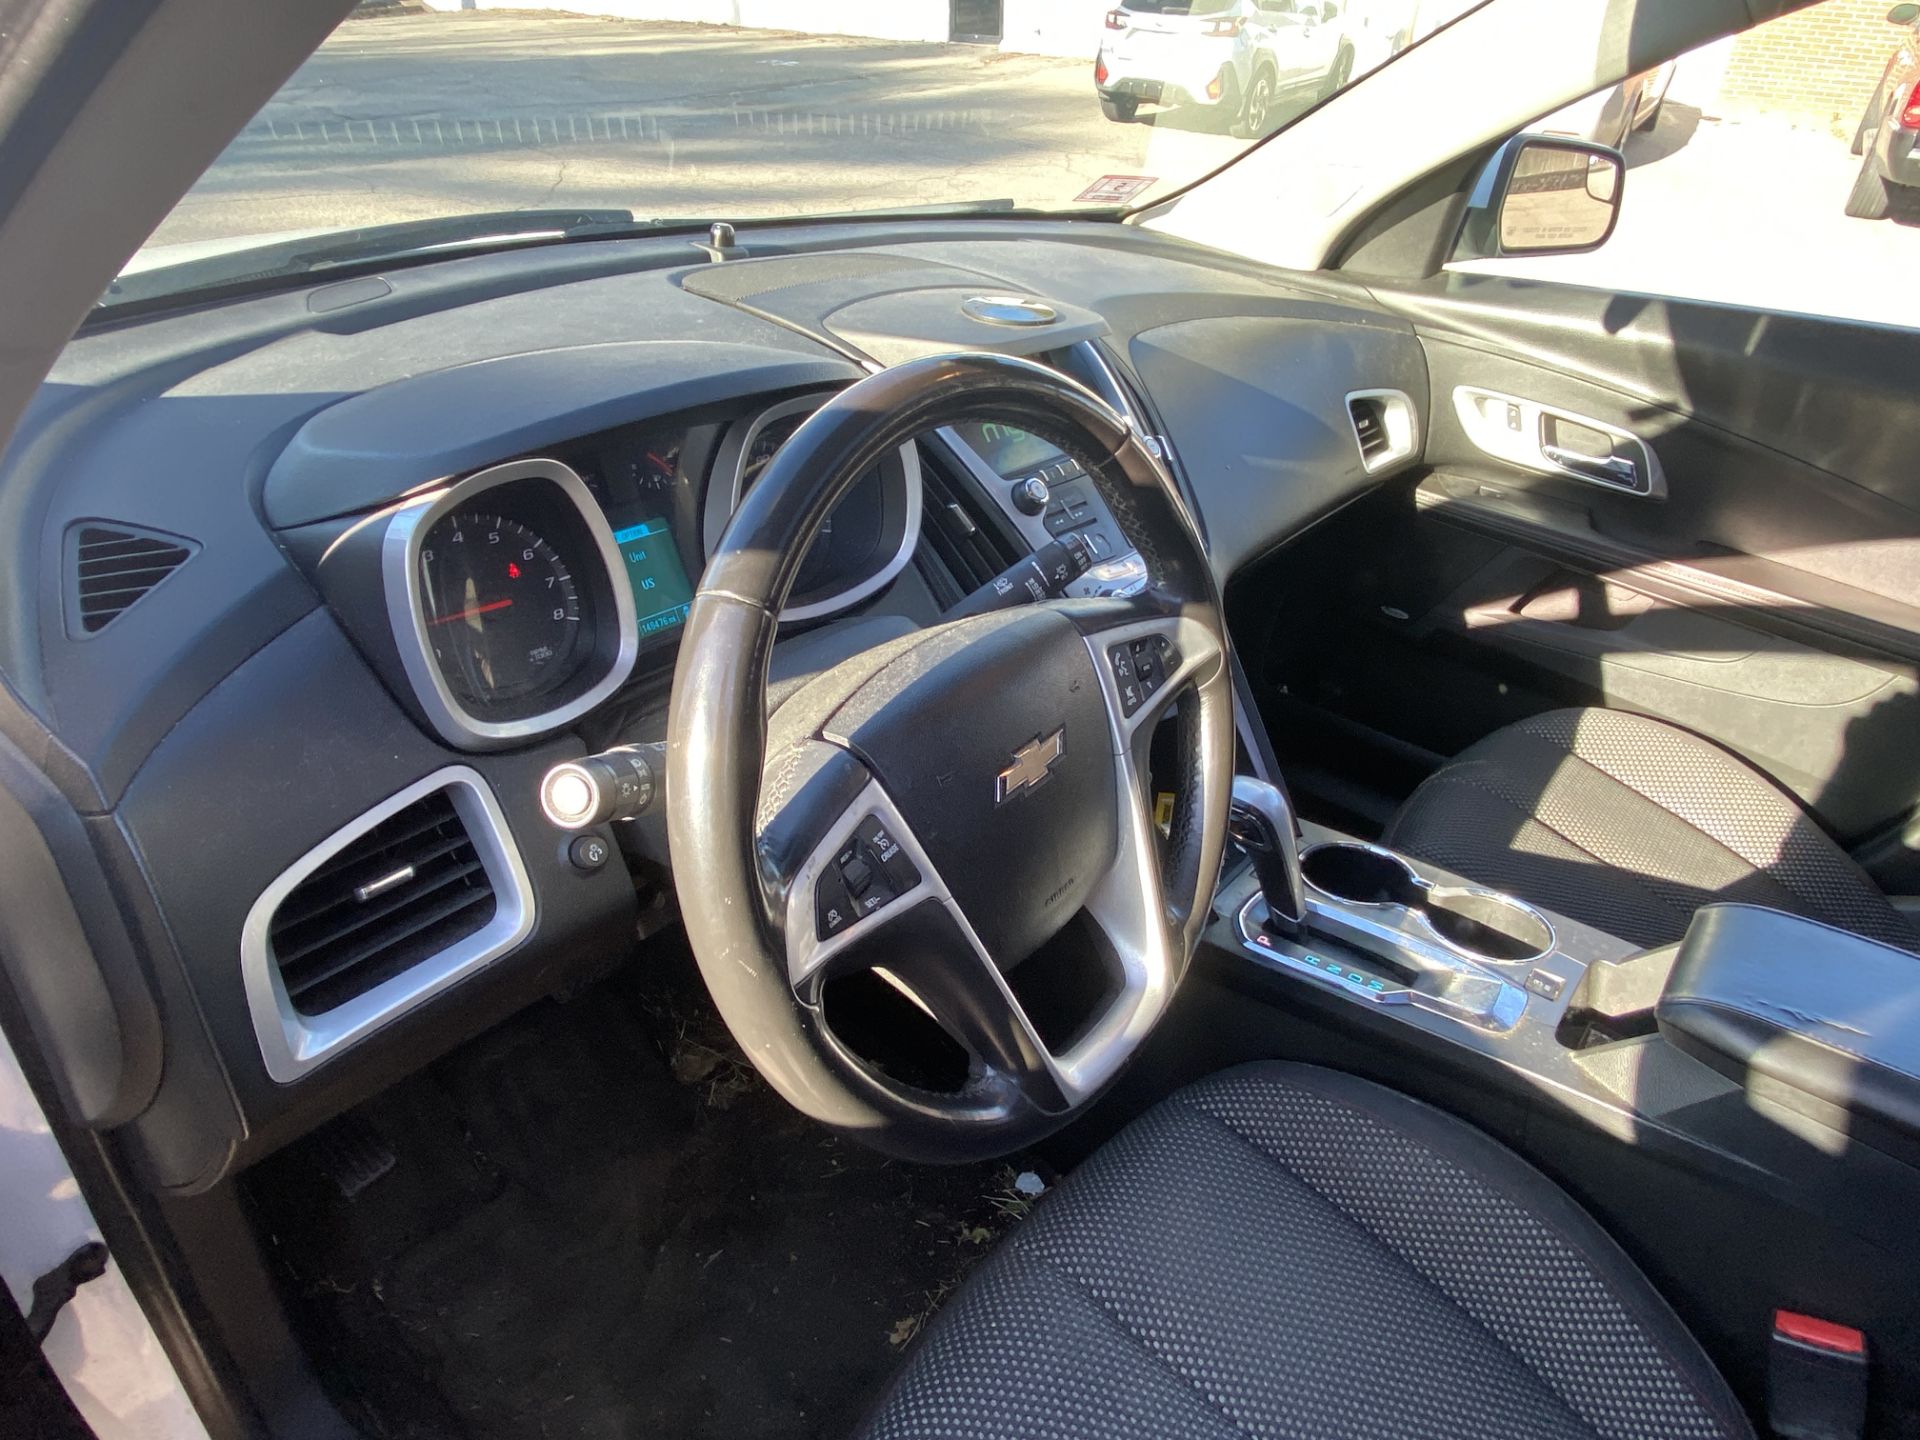 2013 Chevrolet Equinox LT AWD, 4 Cylinder 2.4L, Rear Backup Camera, Power Windows & Locks, Odom:148, - Image 13 of 16